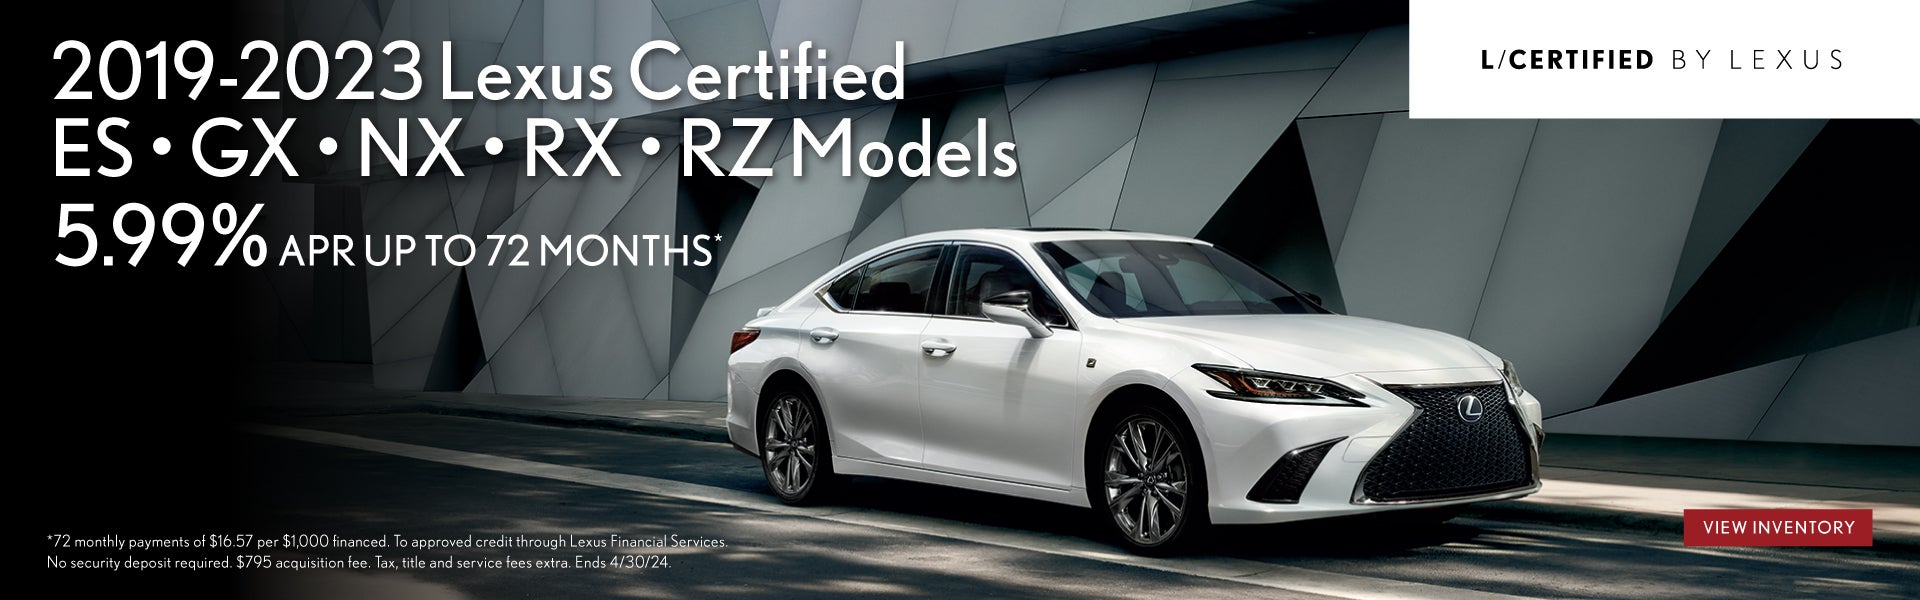 2019-2023 Lexus Certified ES GX NX RX RZ